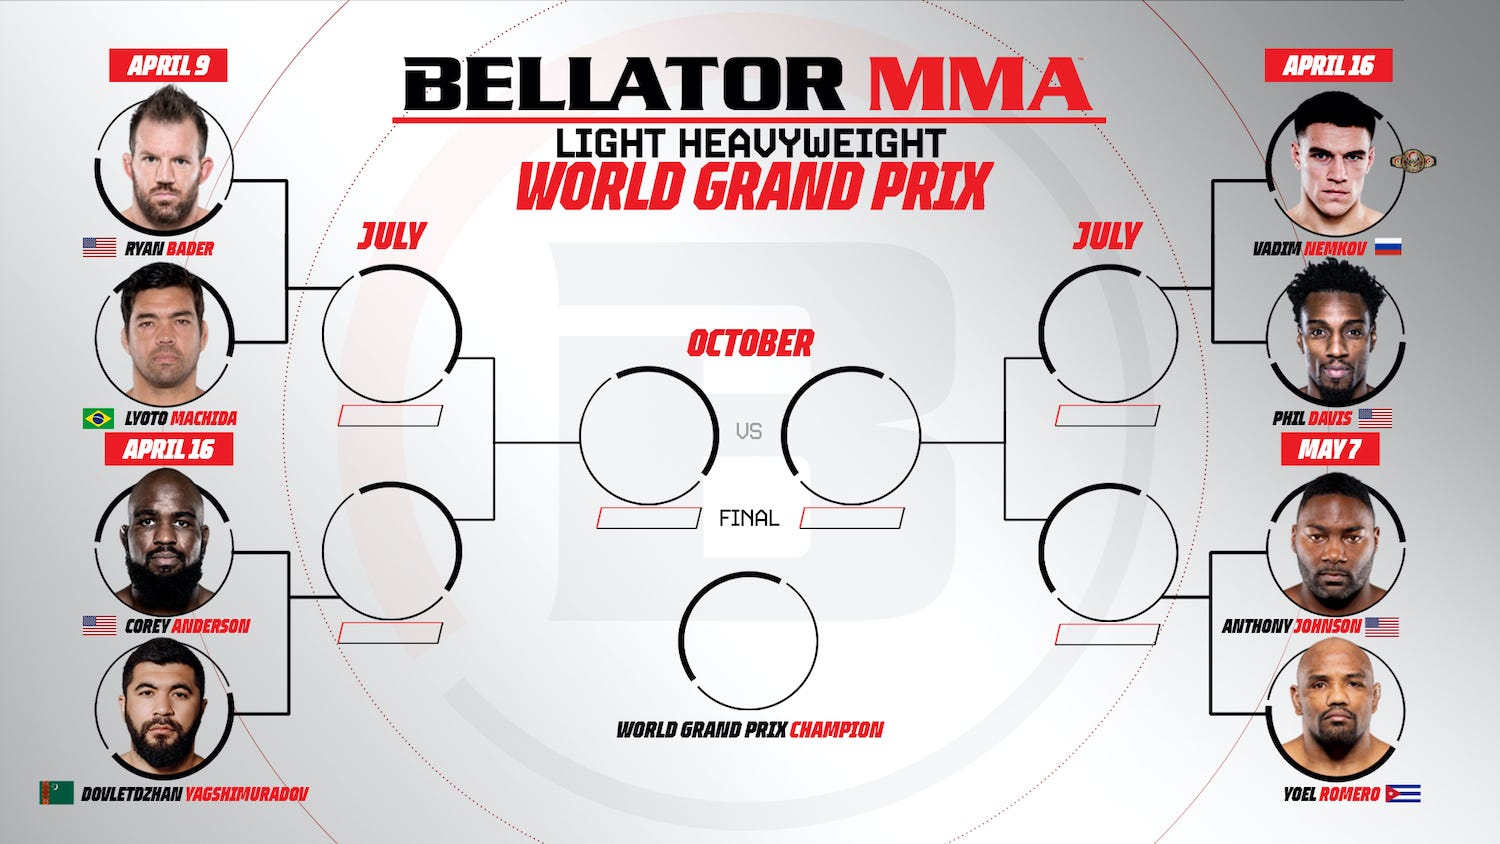 Vadim Nemkov is the Bellator MMA light heavyweight tournament favorite